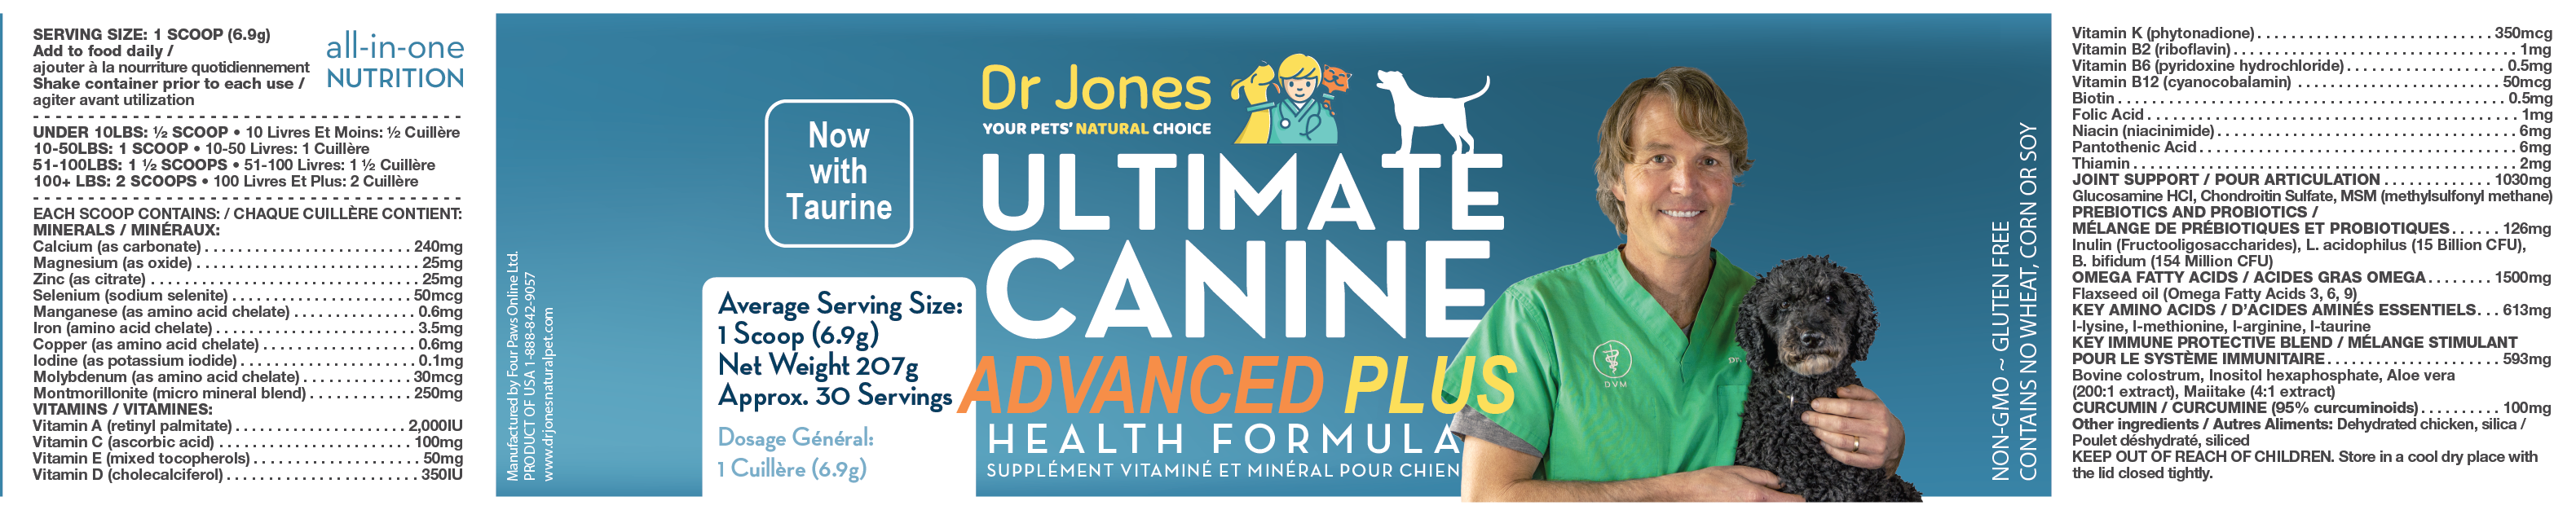 Dr. Jones' Ultimate Canine Advanced Plus Health Formula label